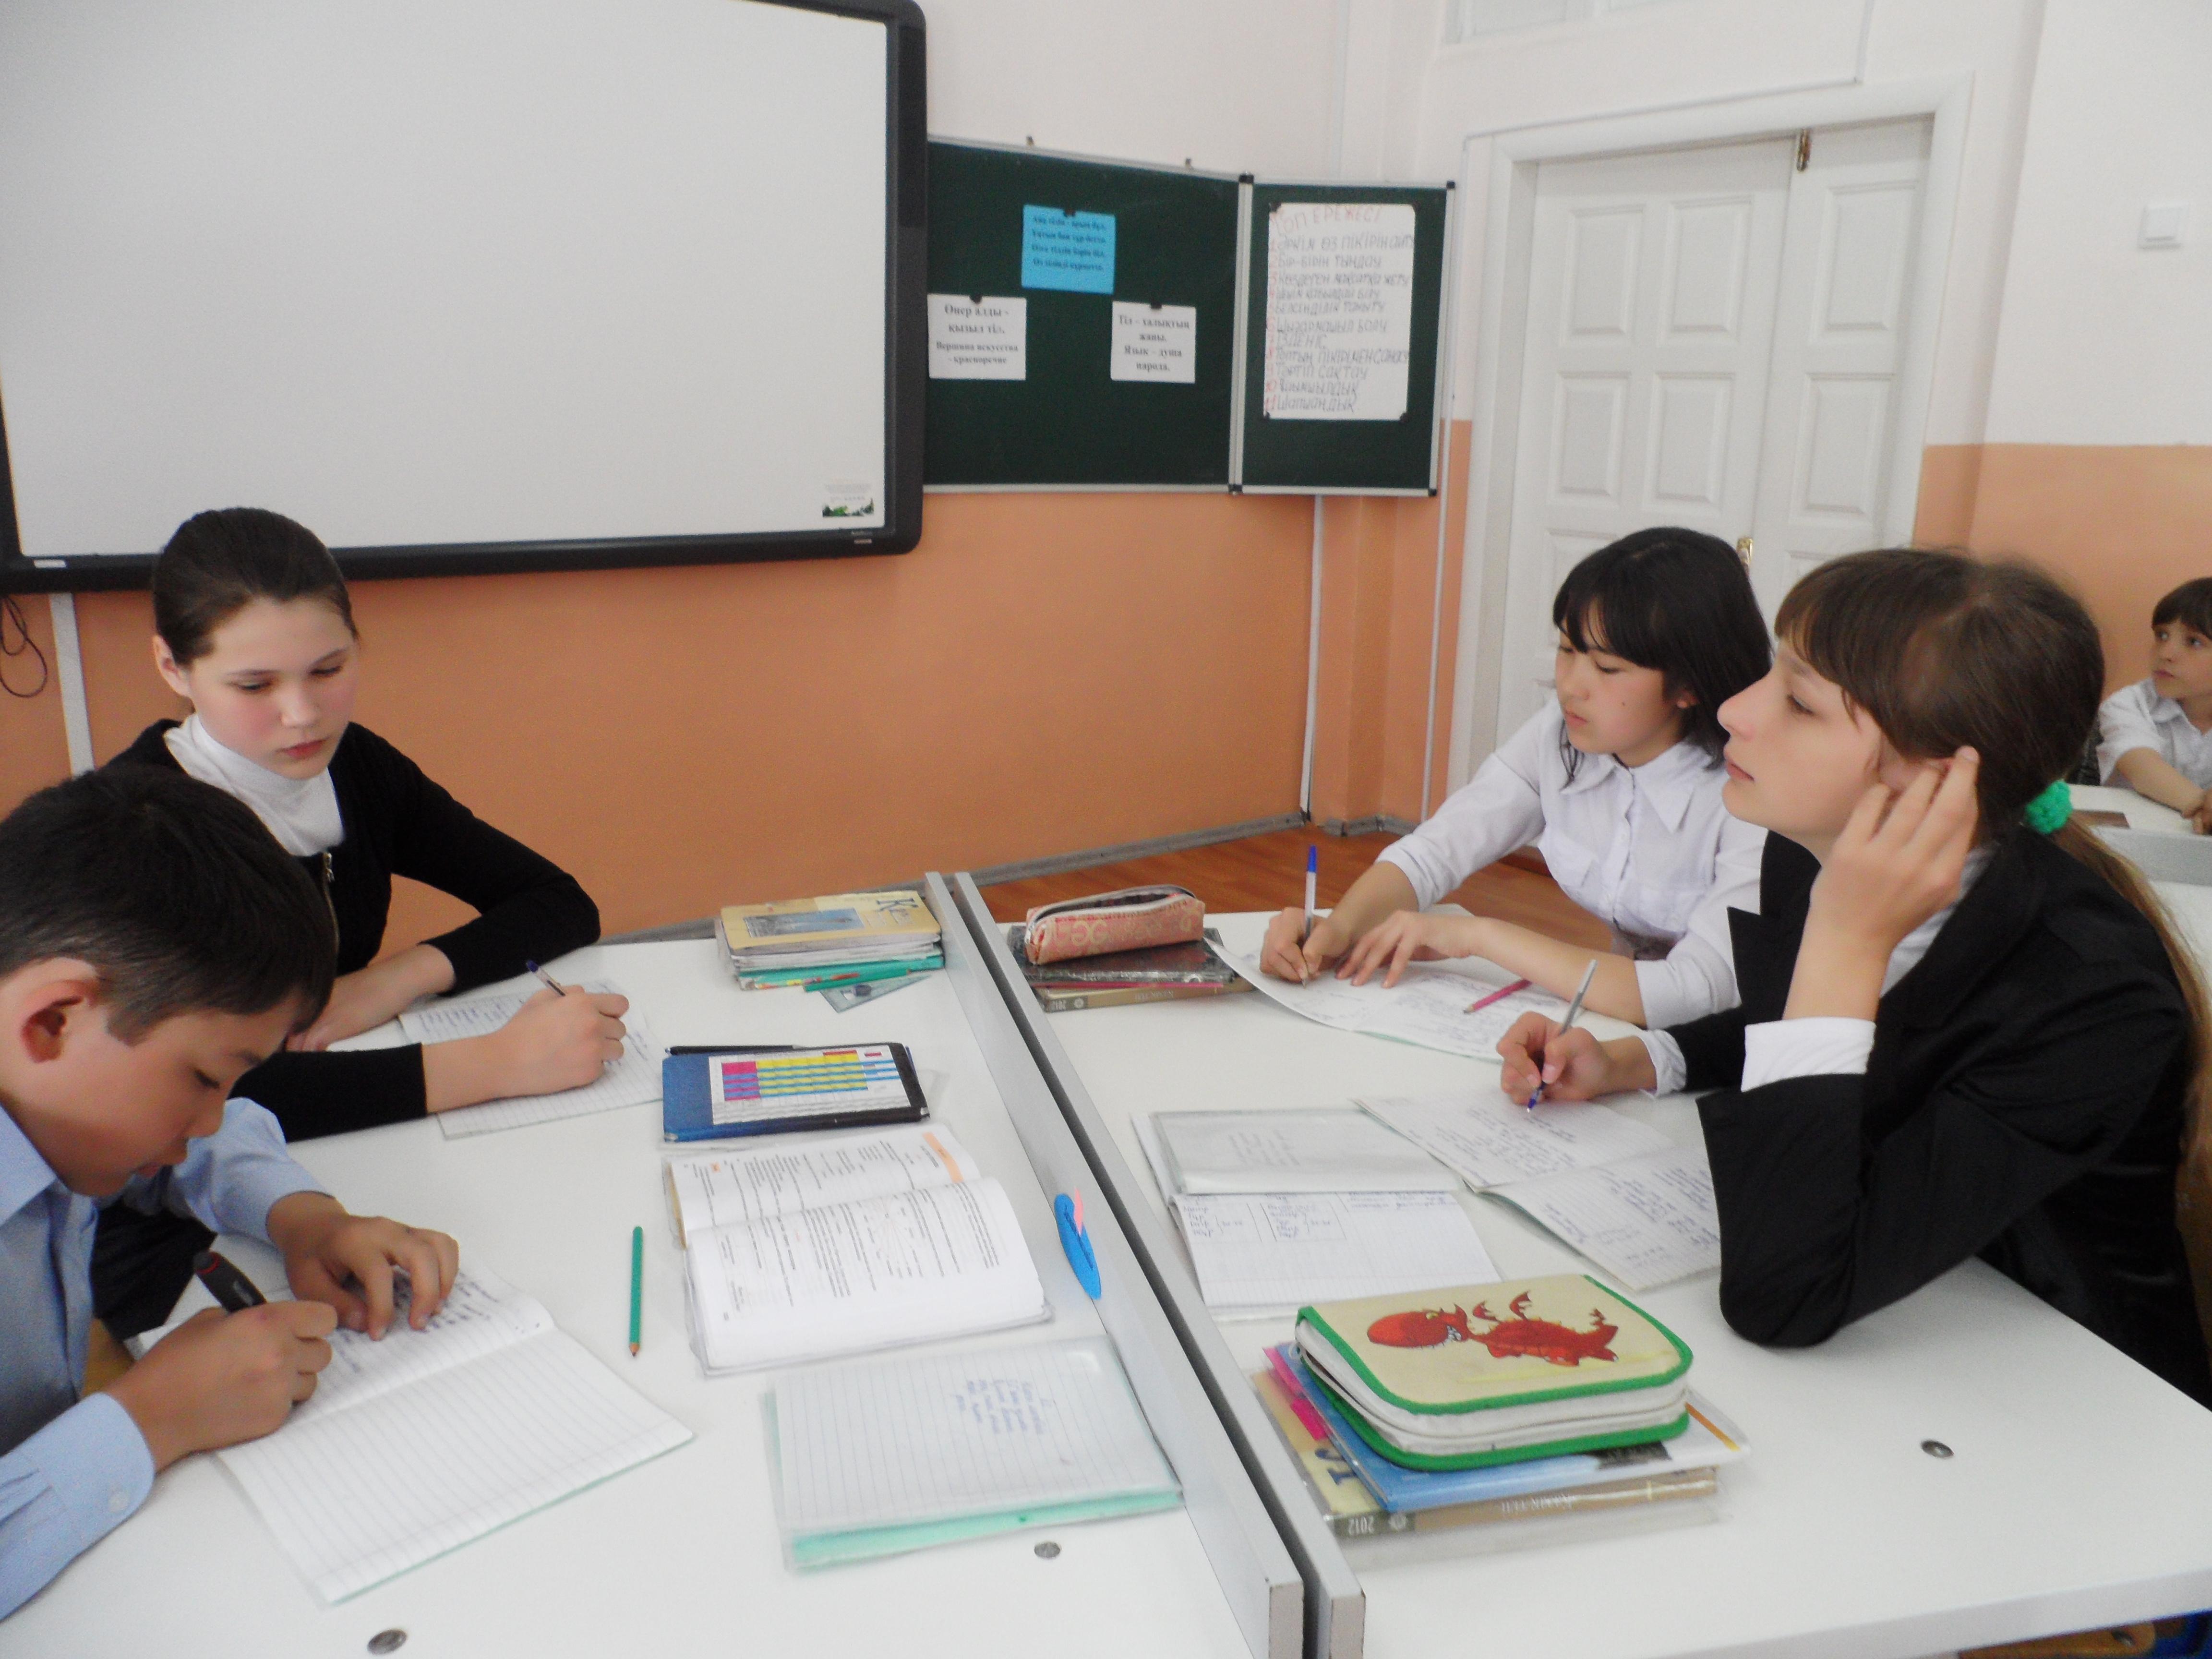 Танымдық білім. Сынып. Мектепте. Начальный класс казахский. Ученики в классе Талас.